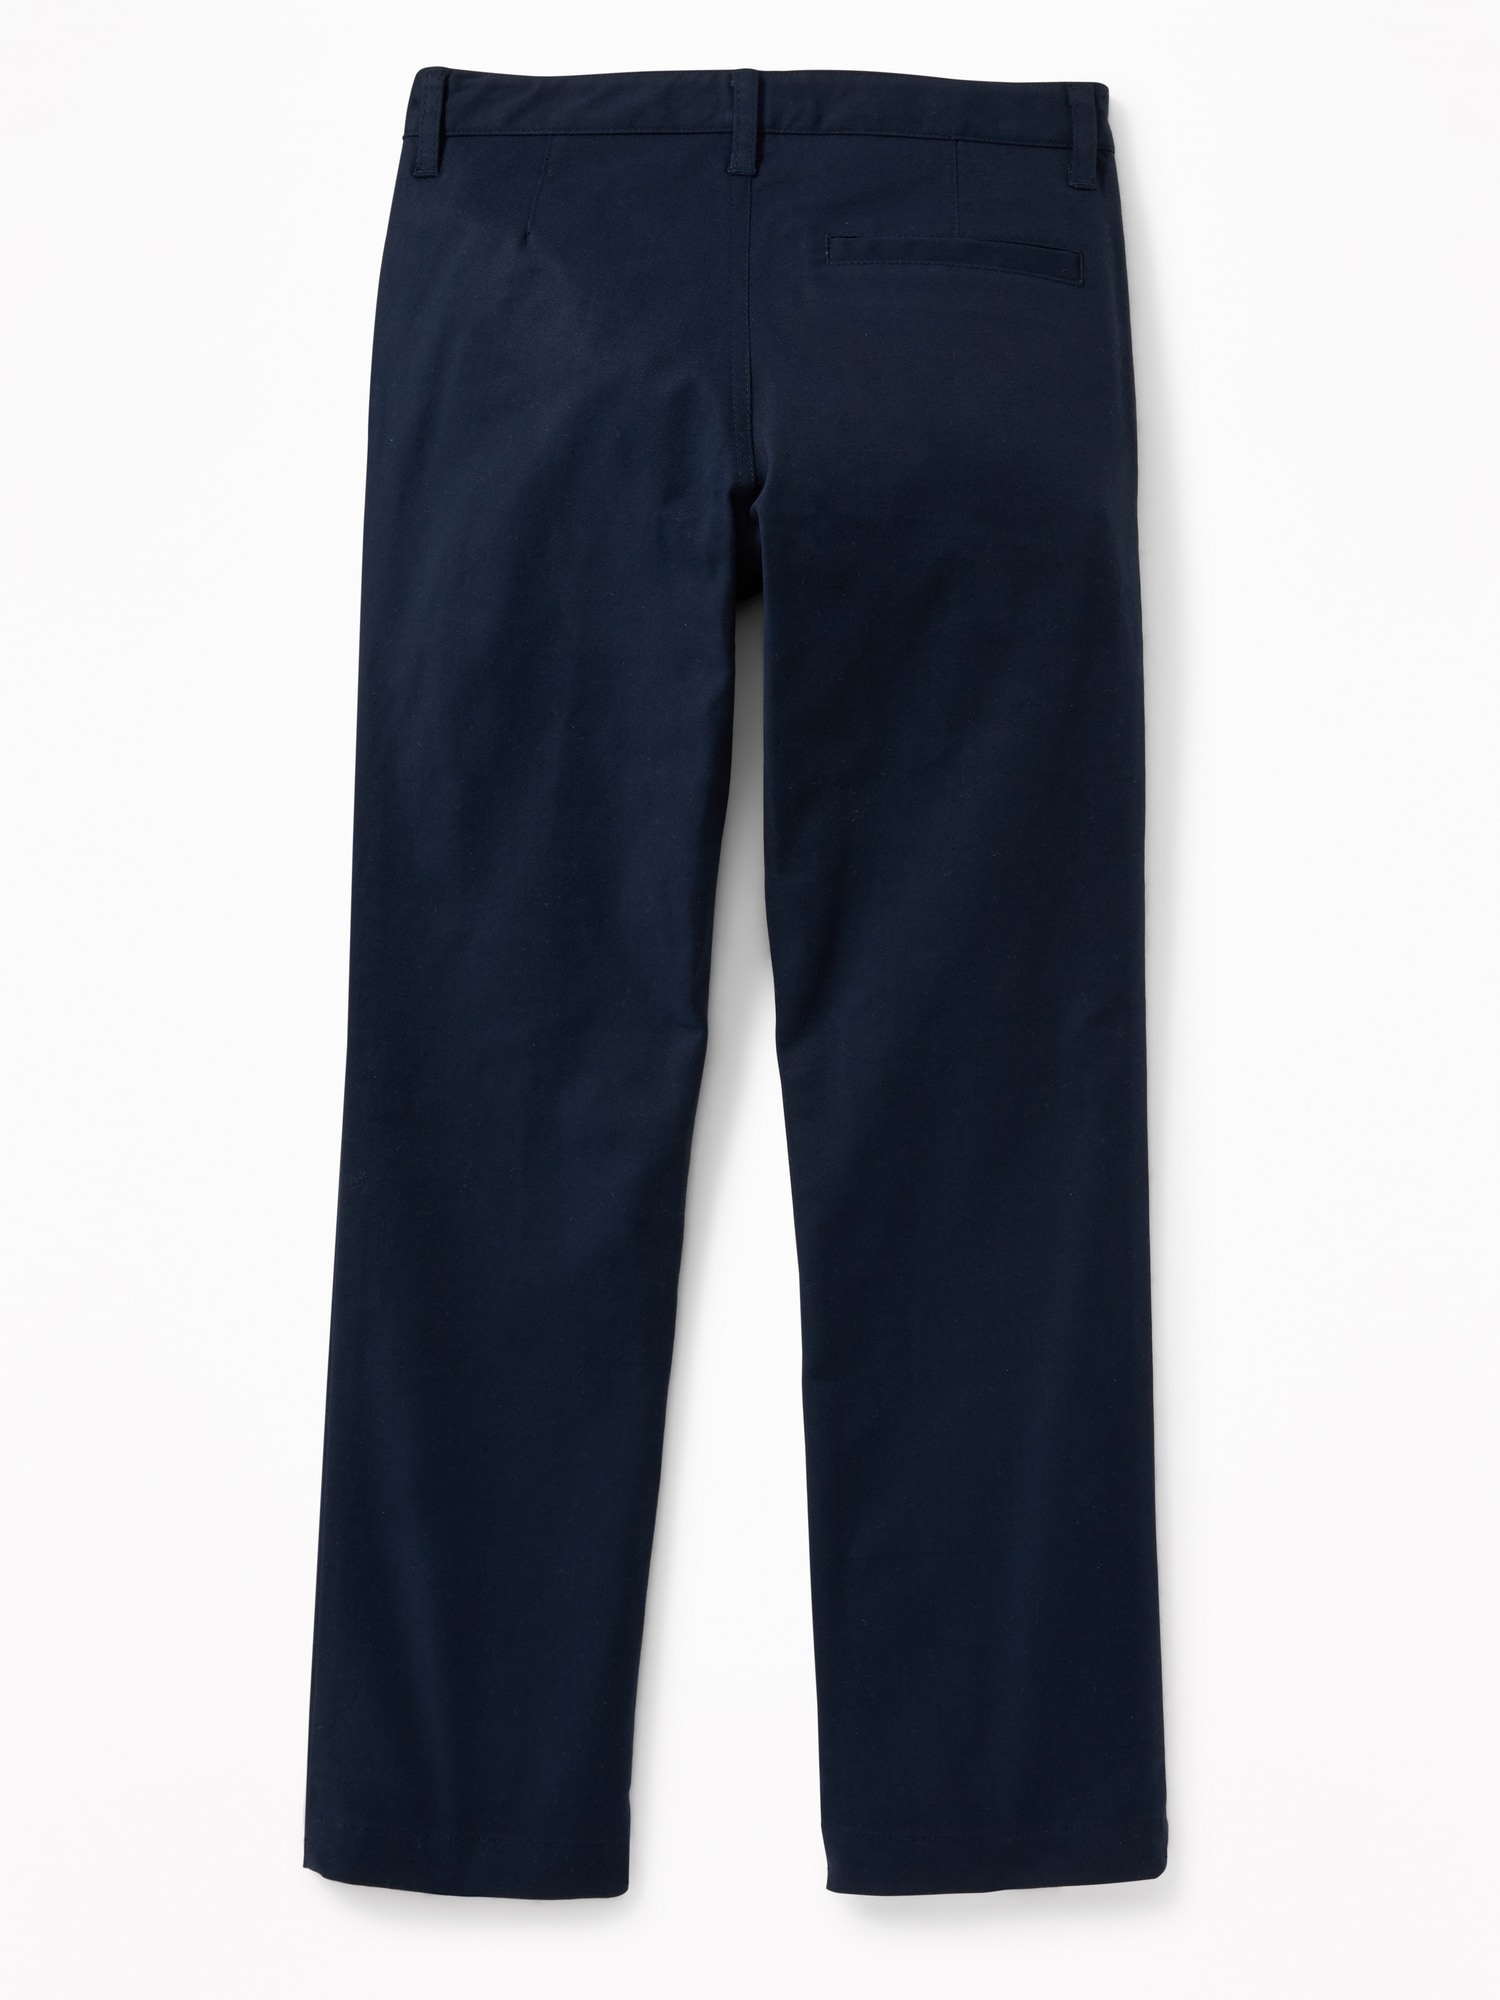 Skinny Built-In Flex Uniform Pants For Boys | Old Navy